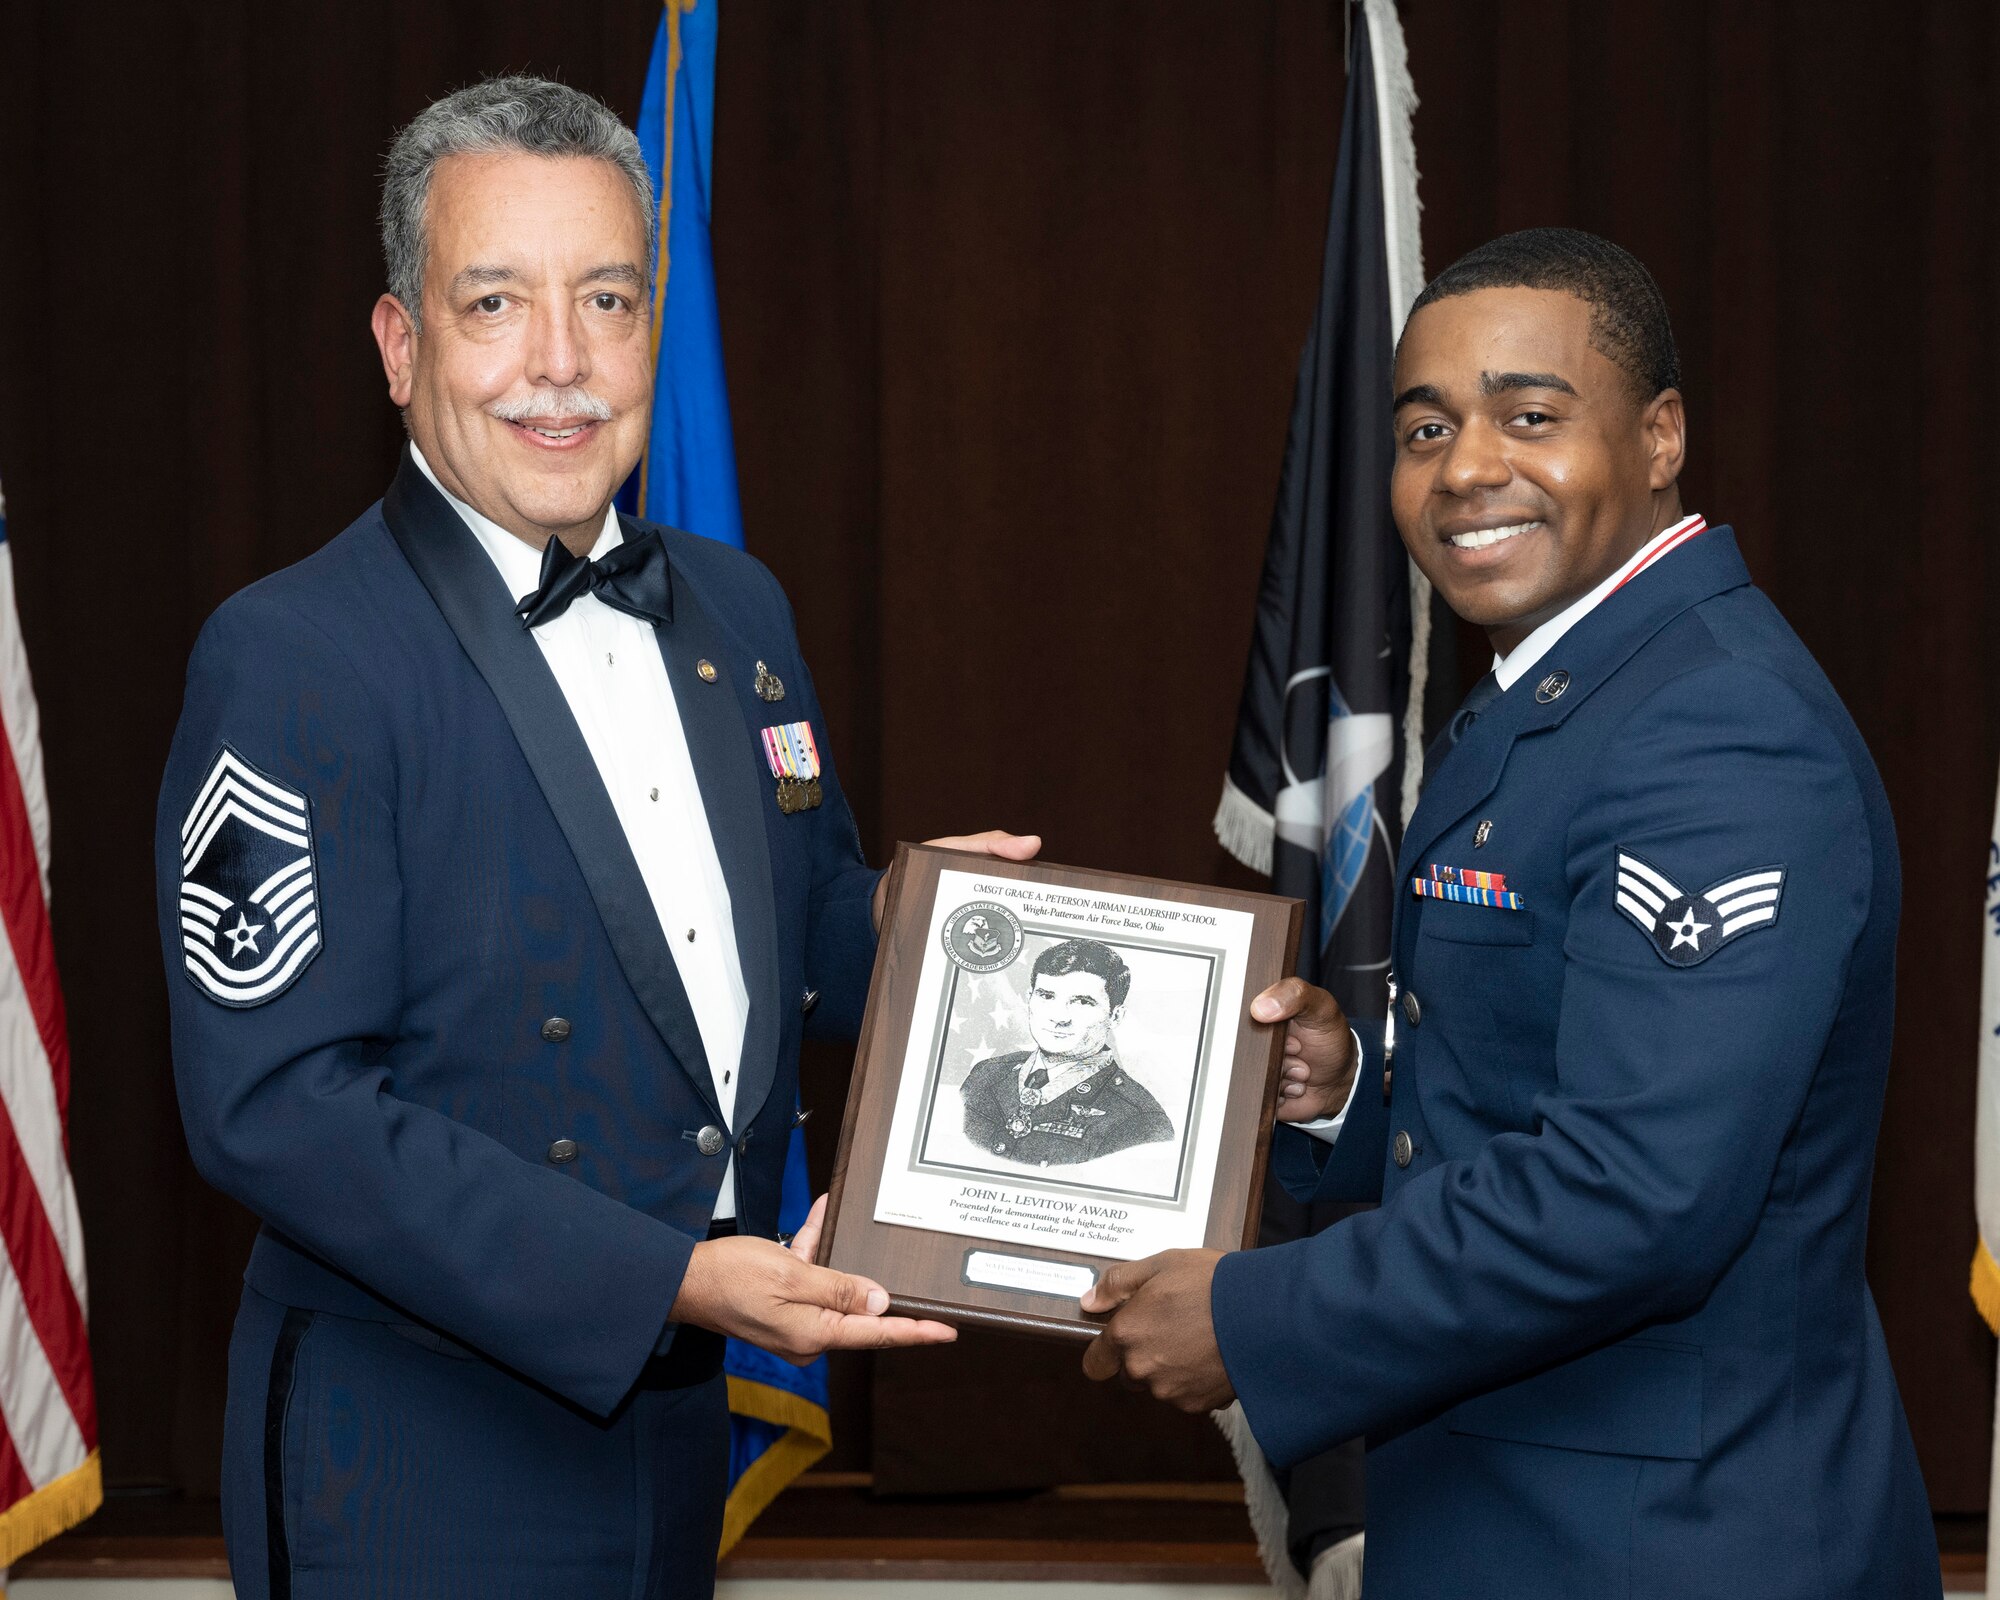 Airman receives award